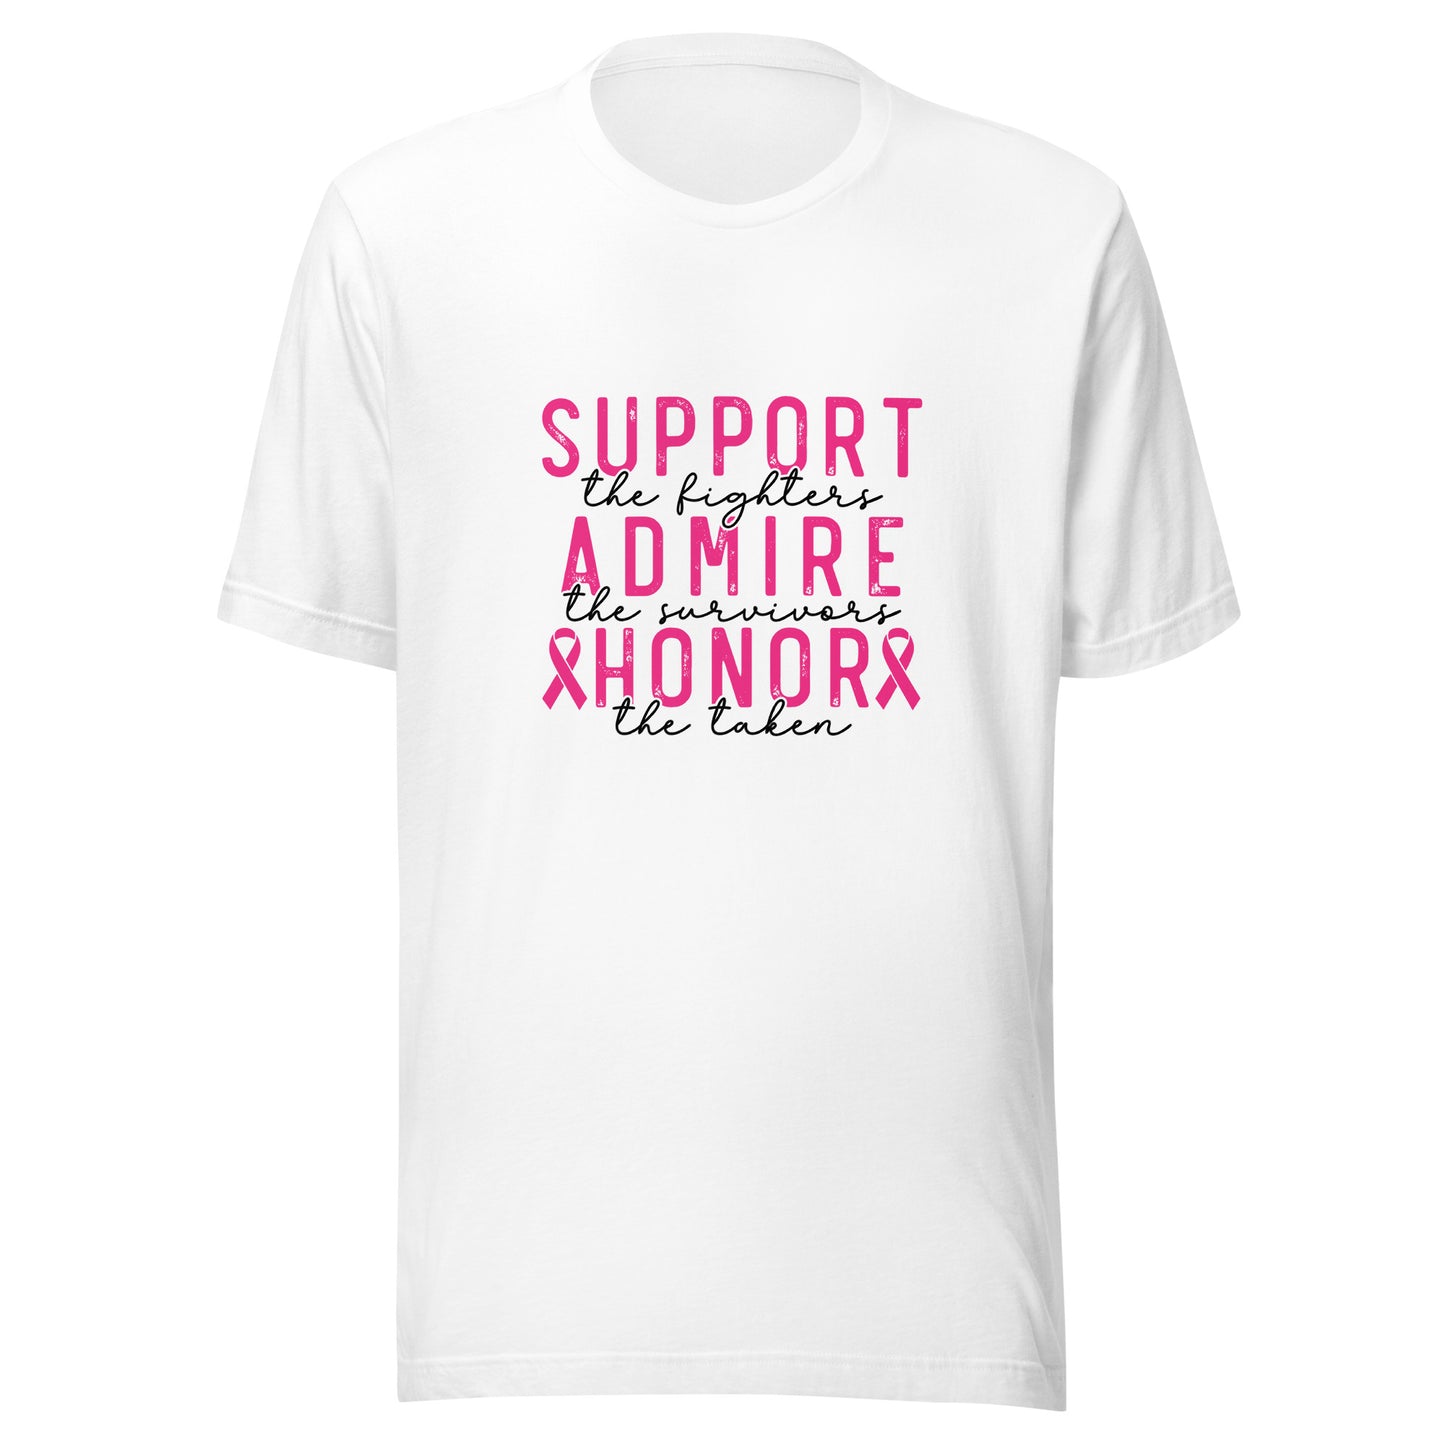 Breast Cancer Support Admire Honor - Survivor - Awareness Unisex T-shirt